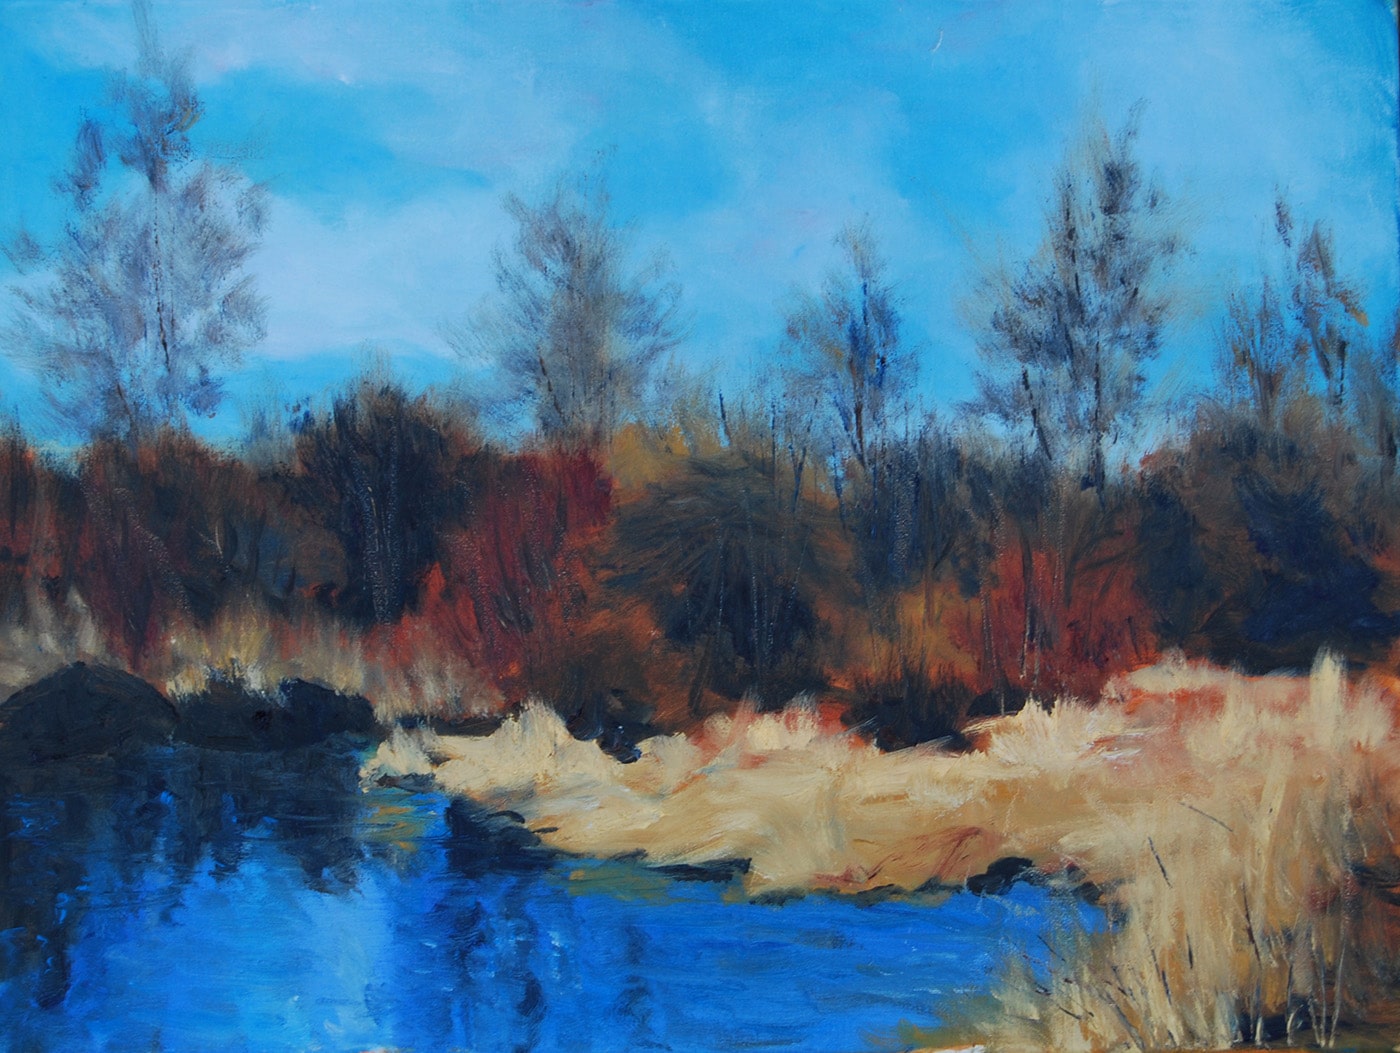 "Marsh in Washington County Wisconsin" 24" x 18" oil on canvas by Frank Hoeffler